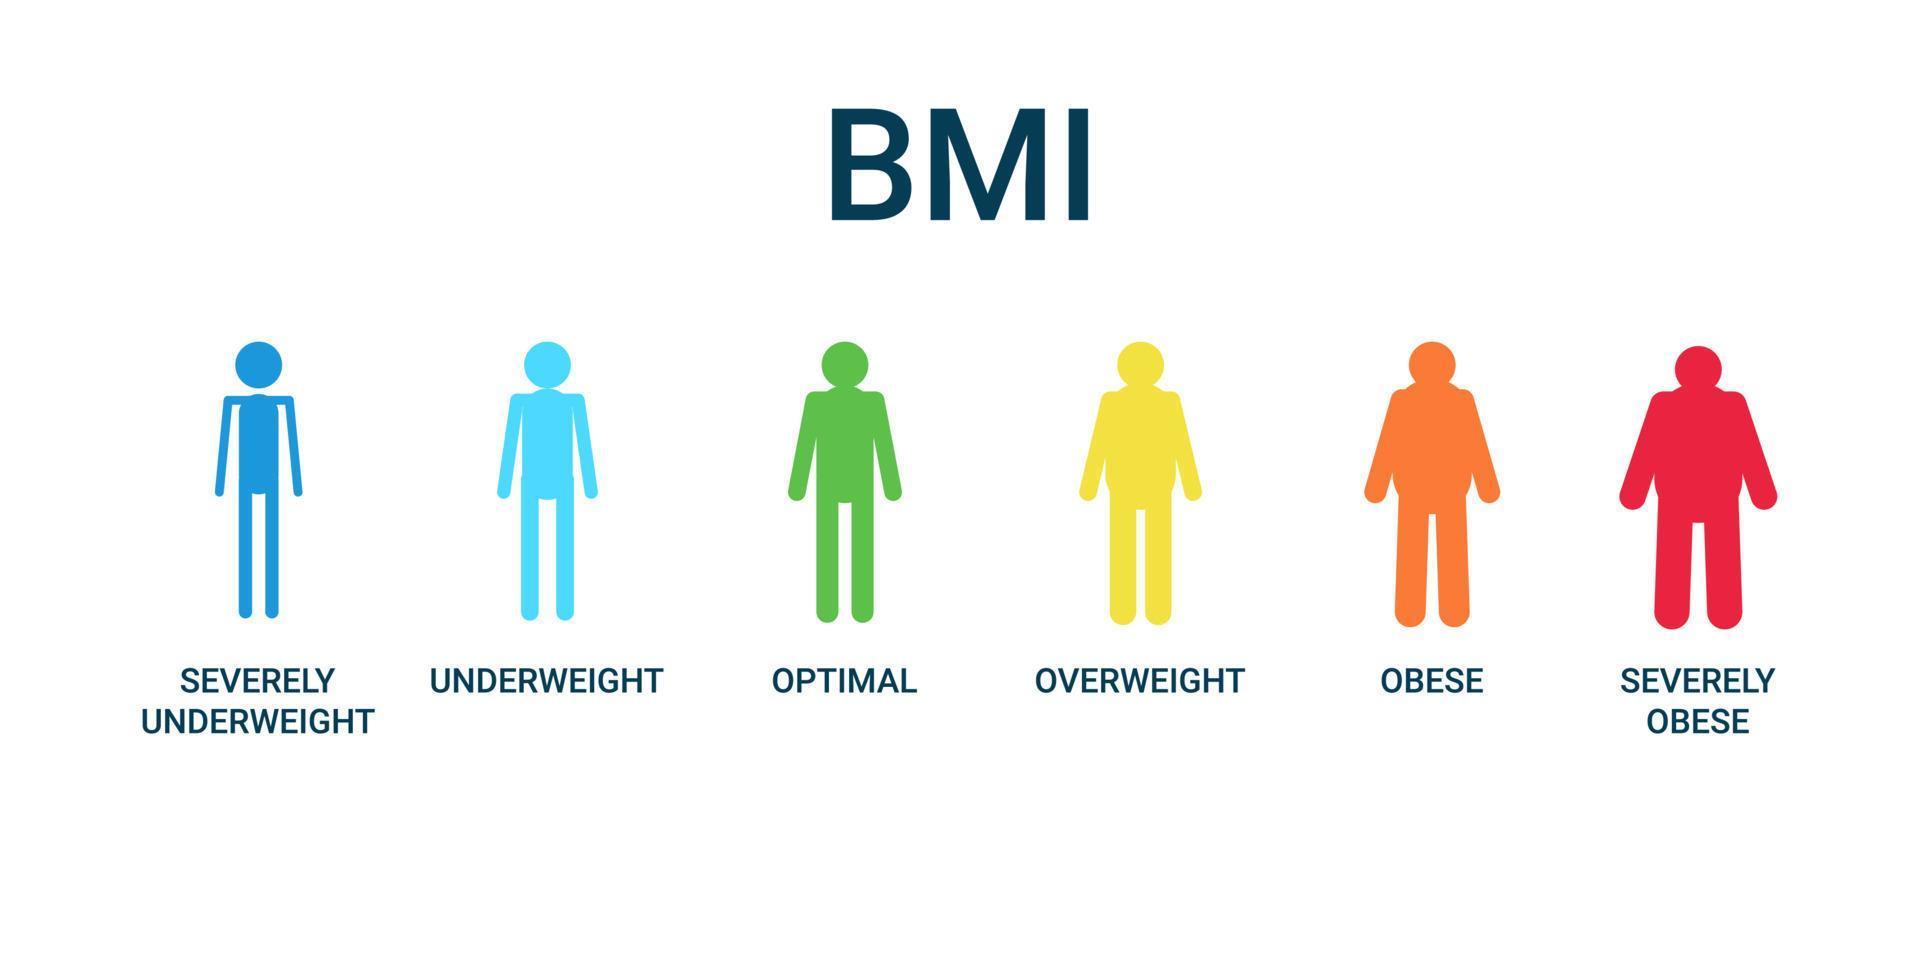 bmi categorieën grafiek, body mass index en schaal massa mensen. ernstig ondergewicht, ondergewicht, optimaal, overgewicht, zwaarlijvig, ernstig zwaarlijvig grafiekcontrole gezondheid. vector illustratie